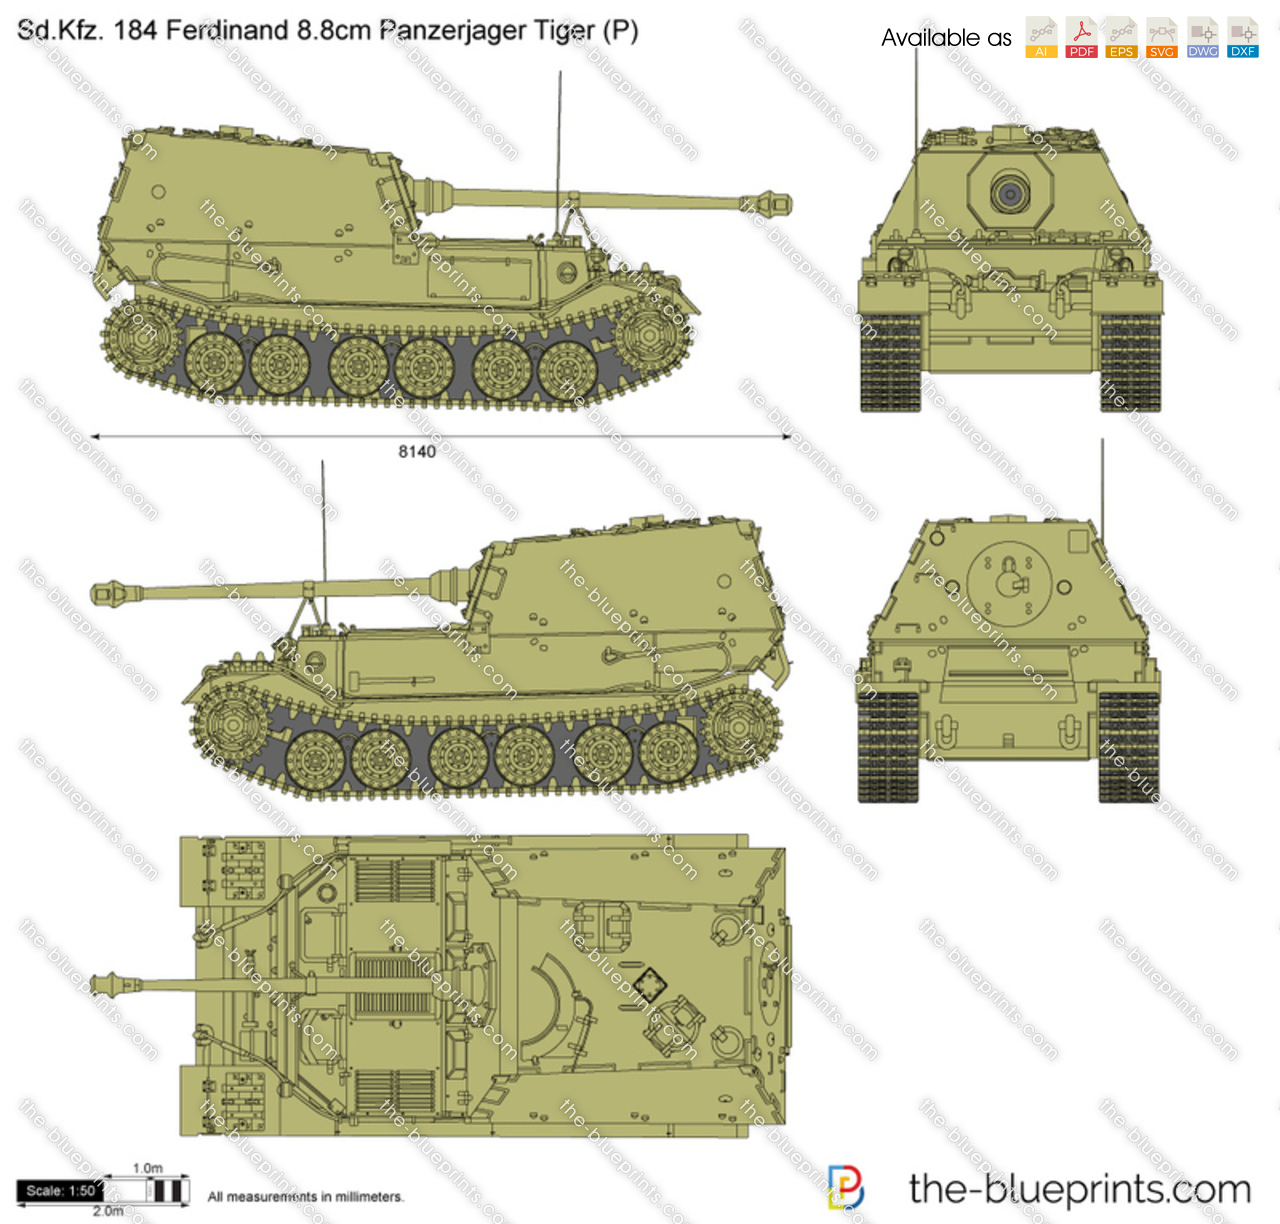 Sd.Kfz. 184 Ferdinand 8.8cm Panzerjager Tiger (P)